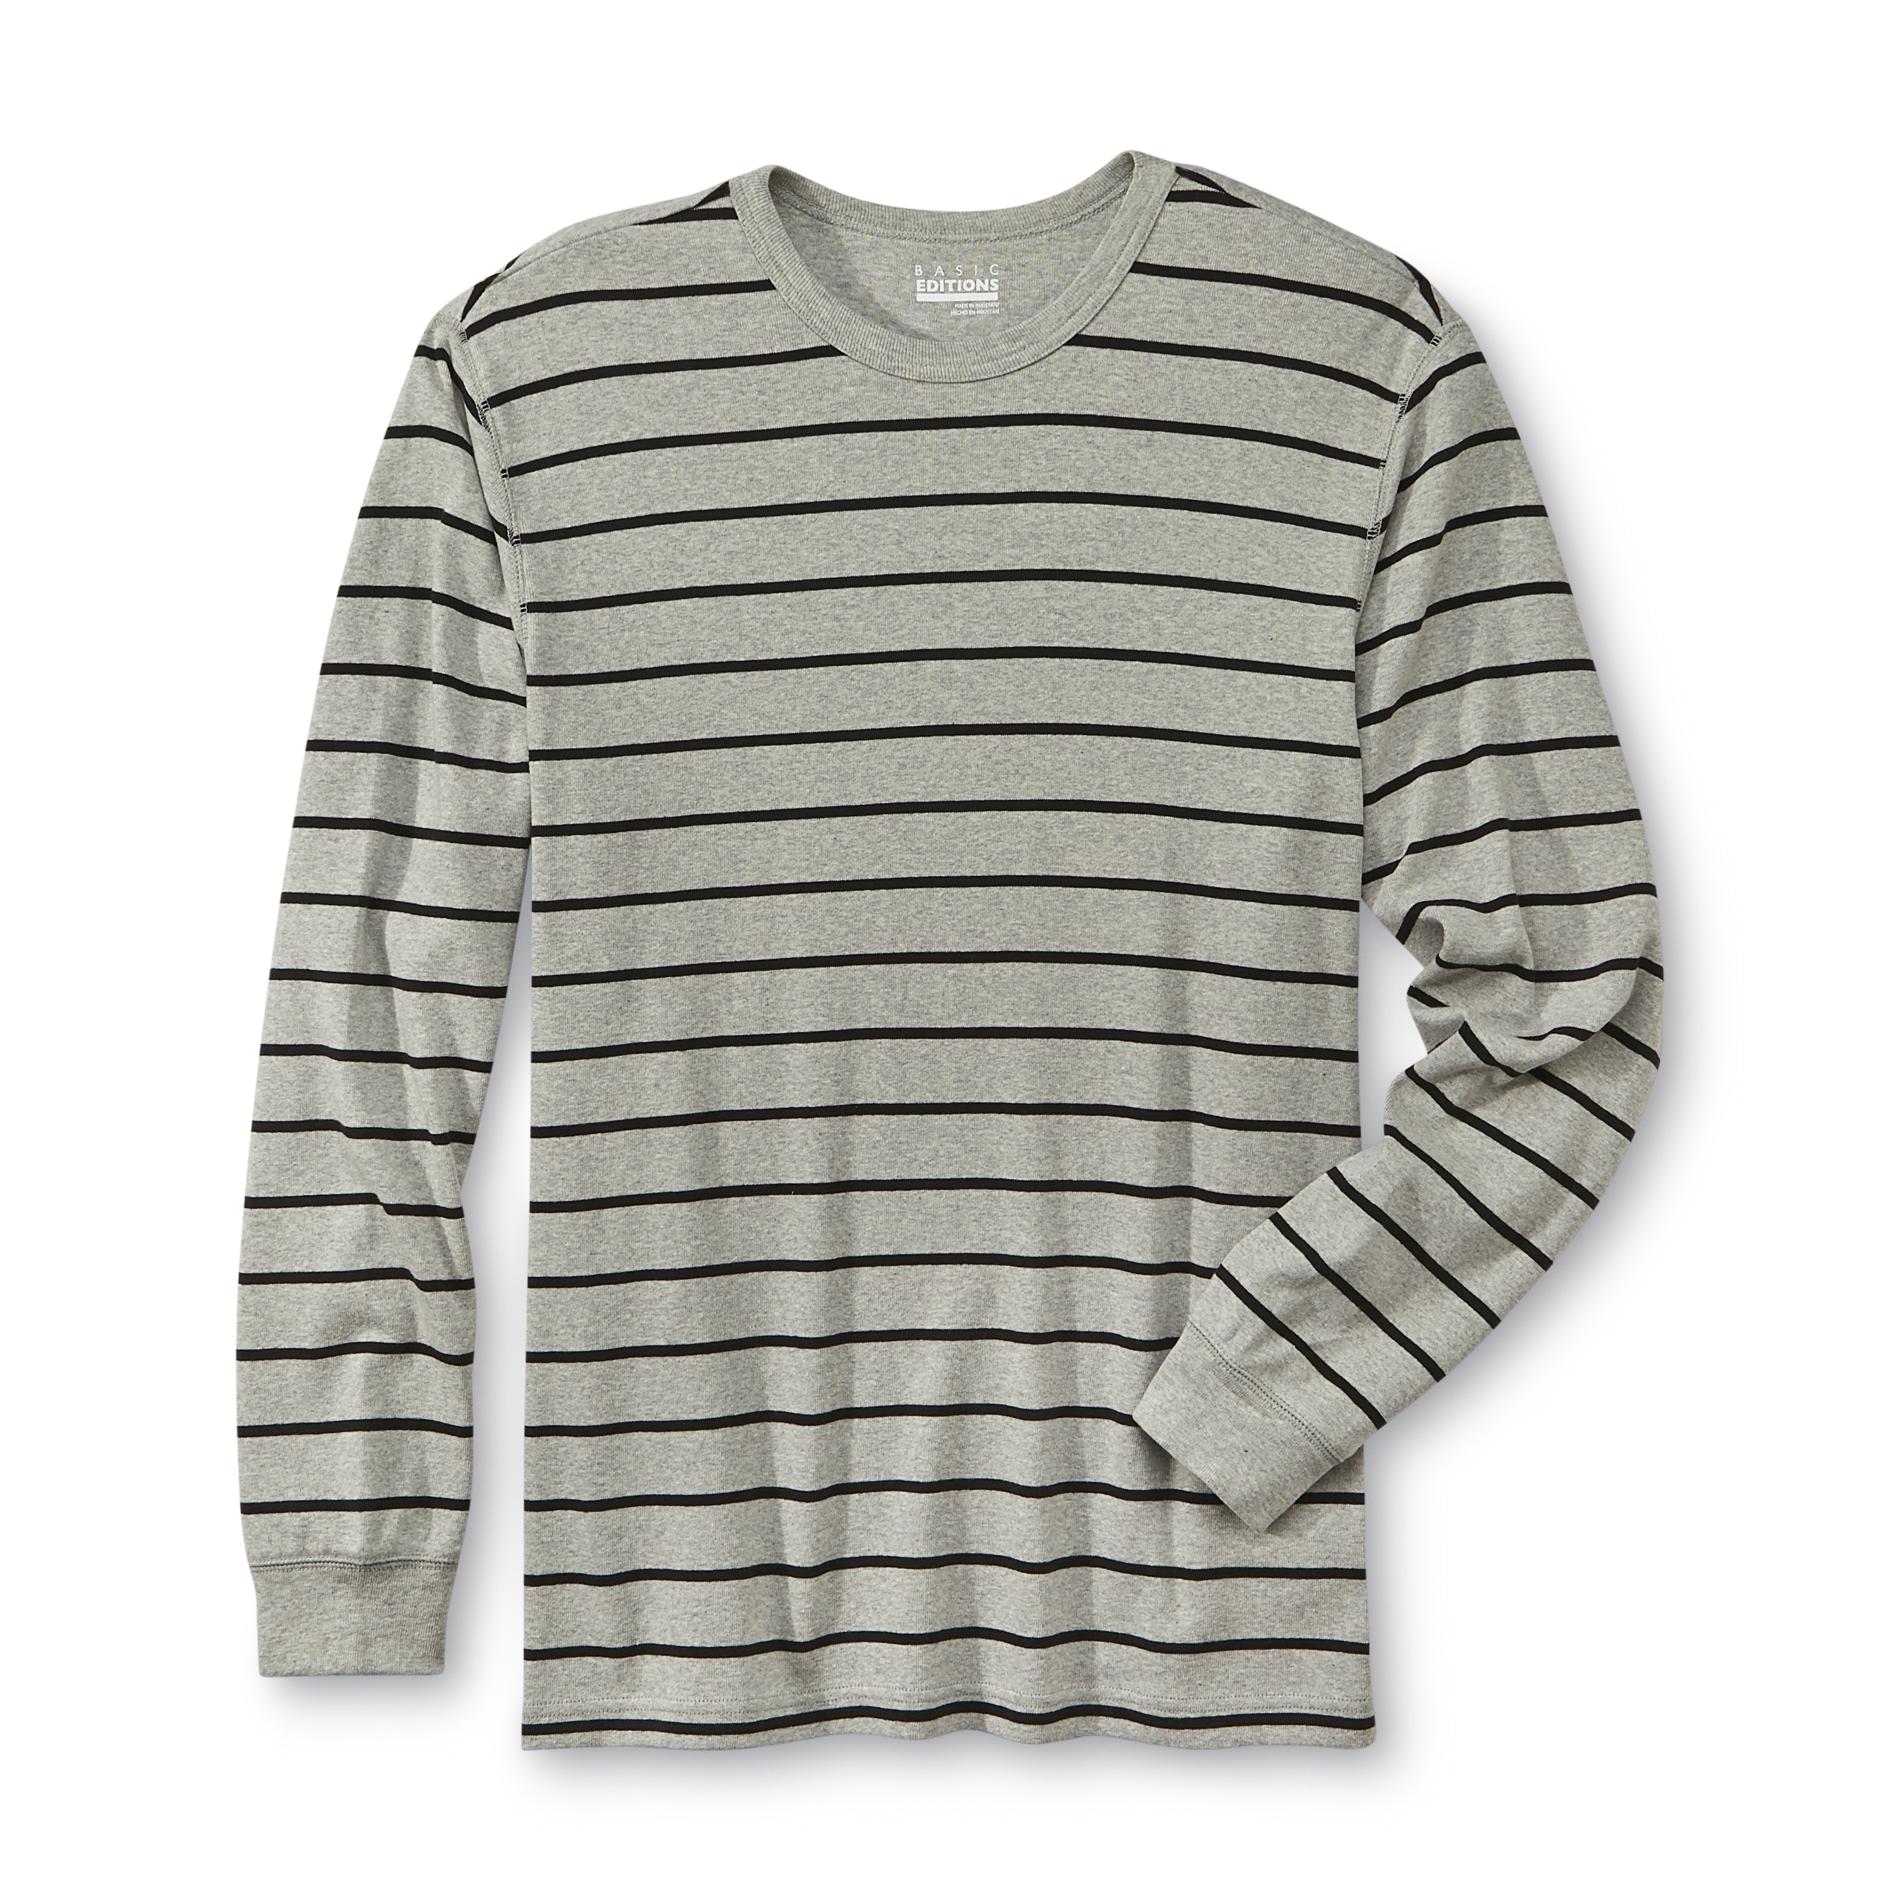 Basic Editions Men's Long-Sleeve Knit Shirt - Heathered Stripe